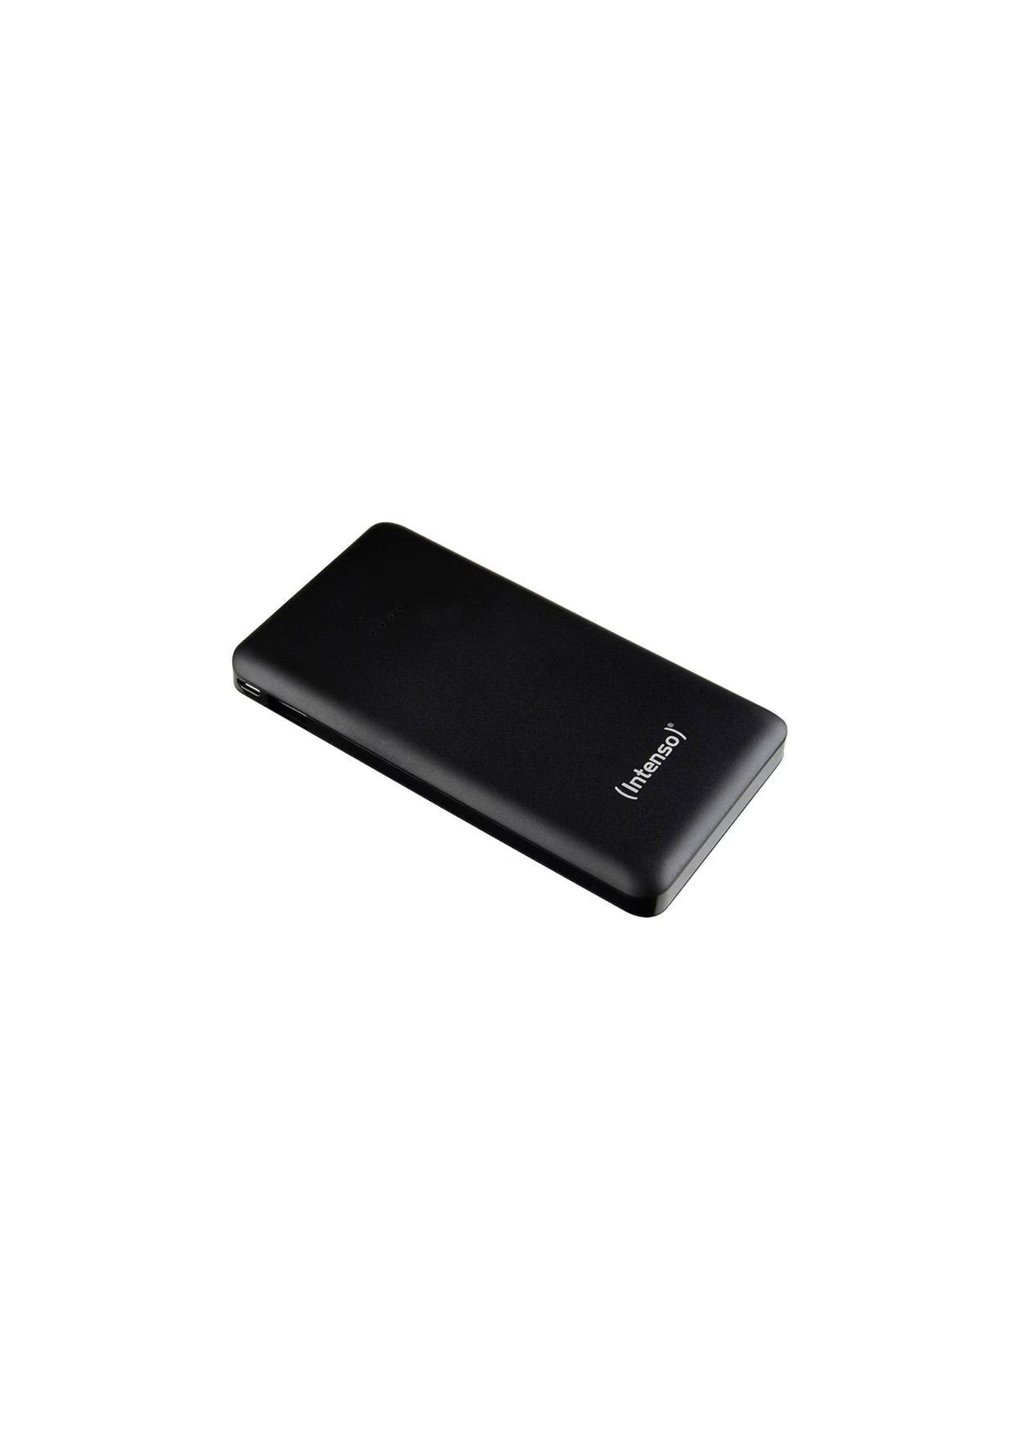 Батарея универсальная S10000 10000mAh microUSB, USB-A, 2.1A, Black (7332530) Intenso